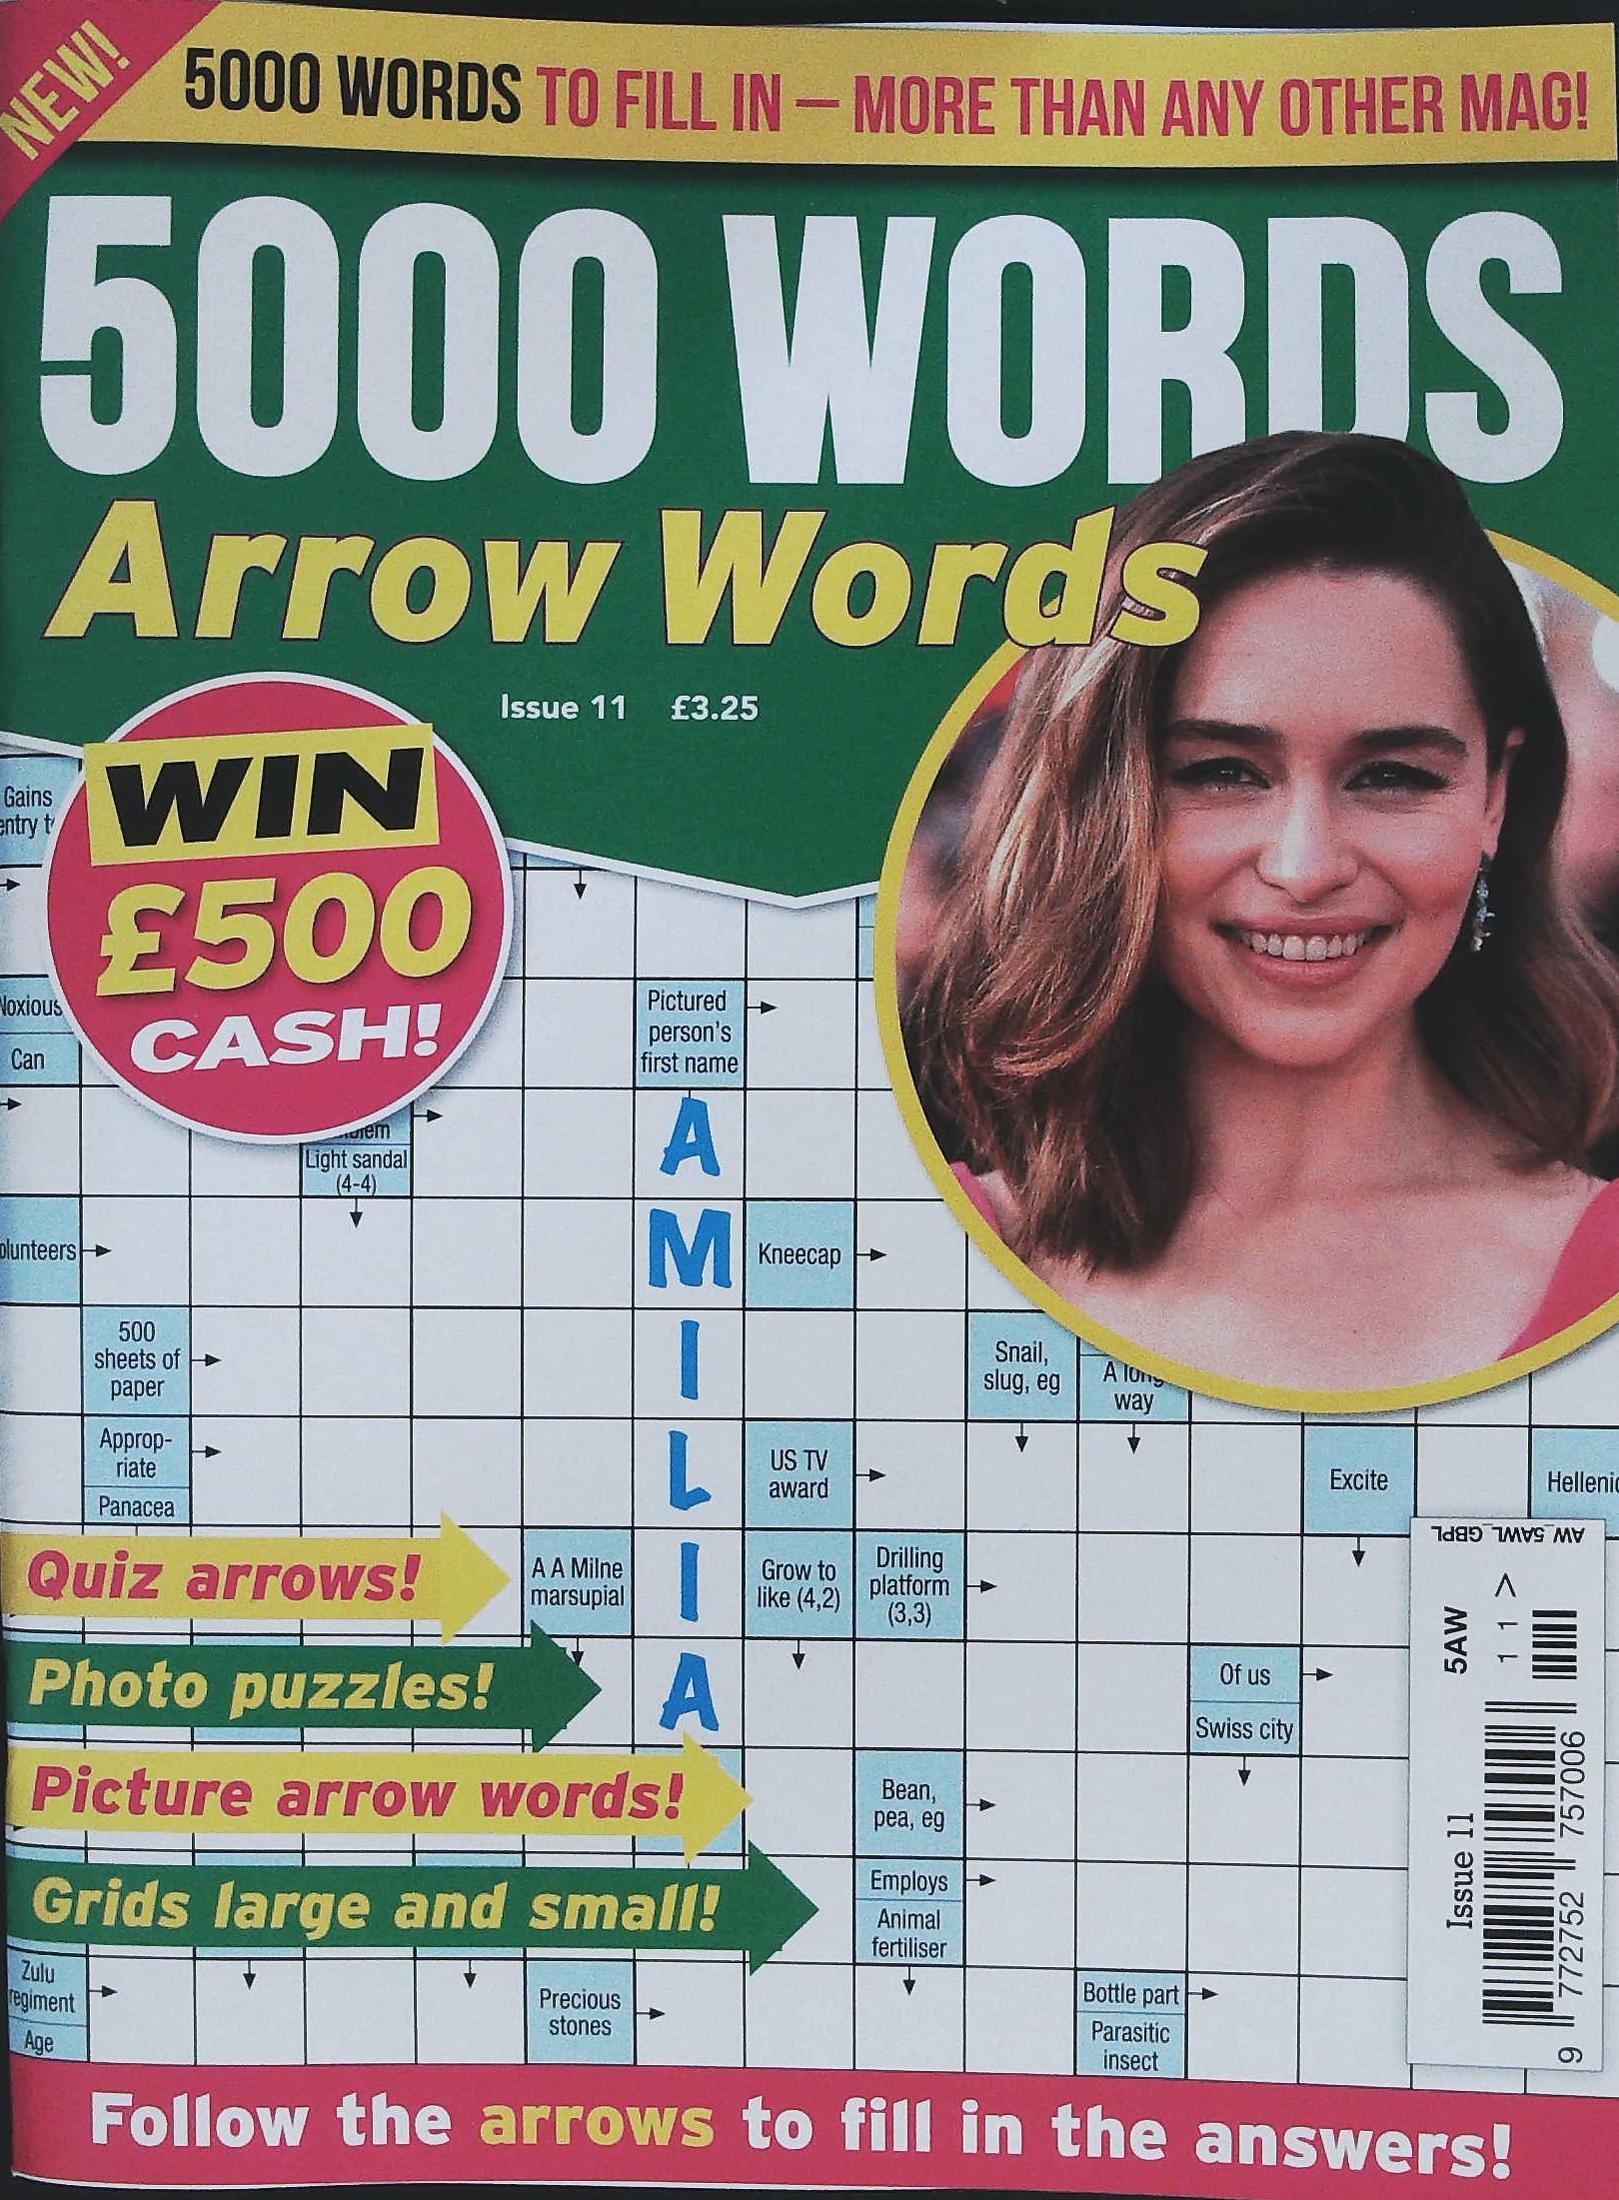 5000 WORDS ARROWWORDS